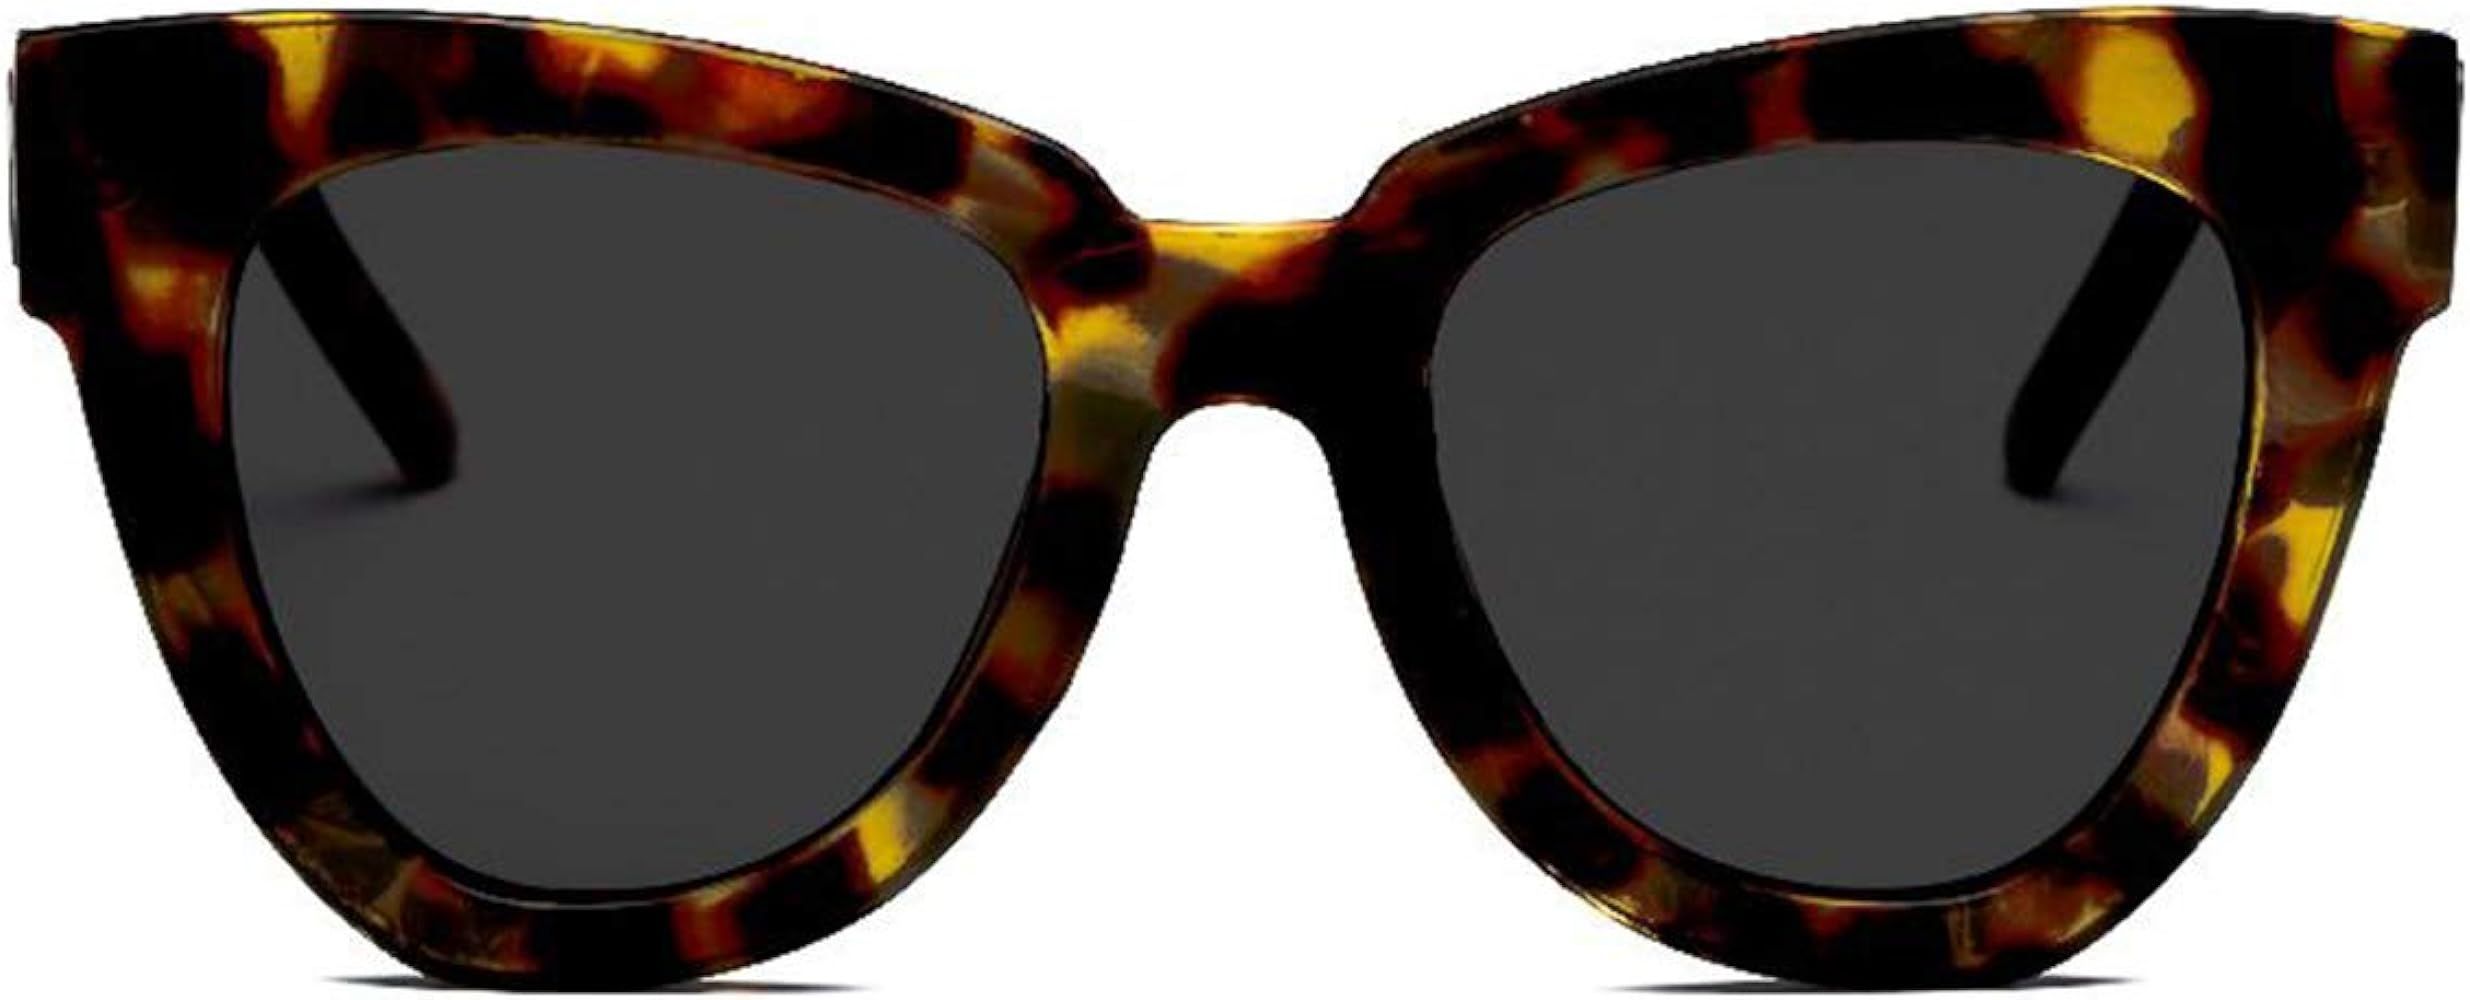 Dollger Retro Cat Eye Sunglasses Women Men Vintage Square Tortoise Shell Fashion Cateye Sunglasses | Amazon (US)